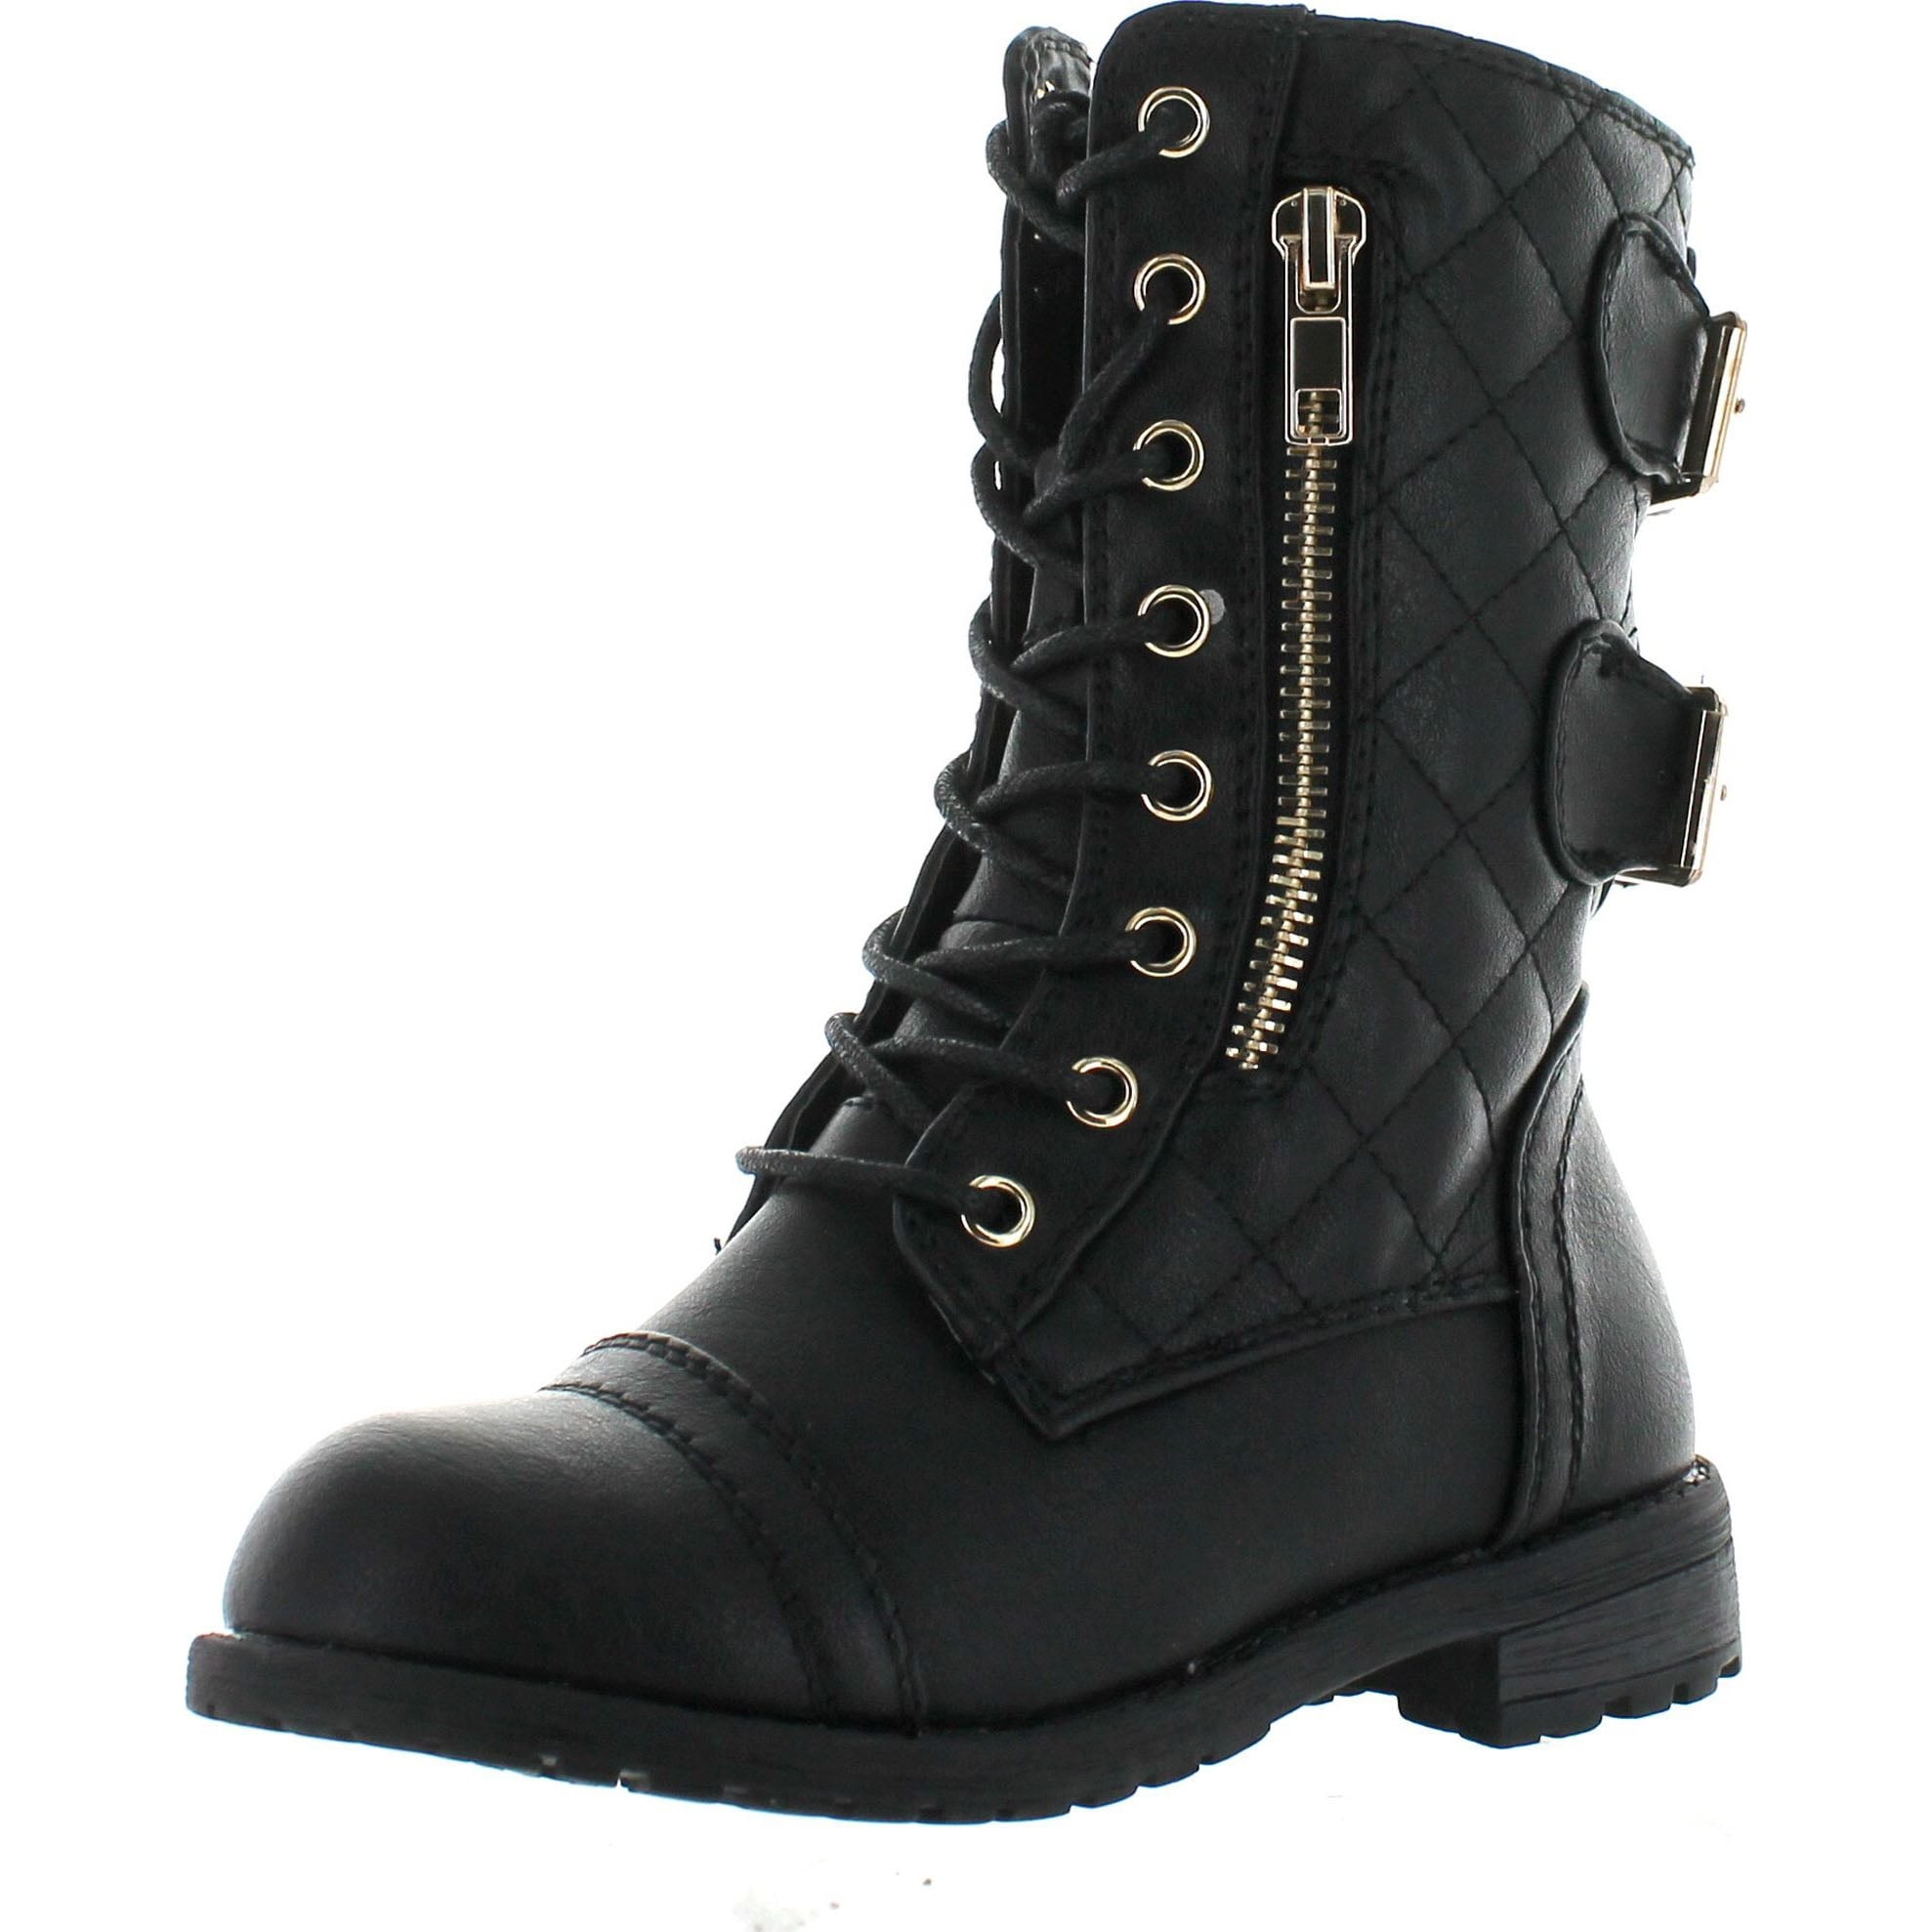 girls white combat boots